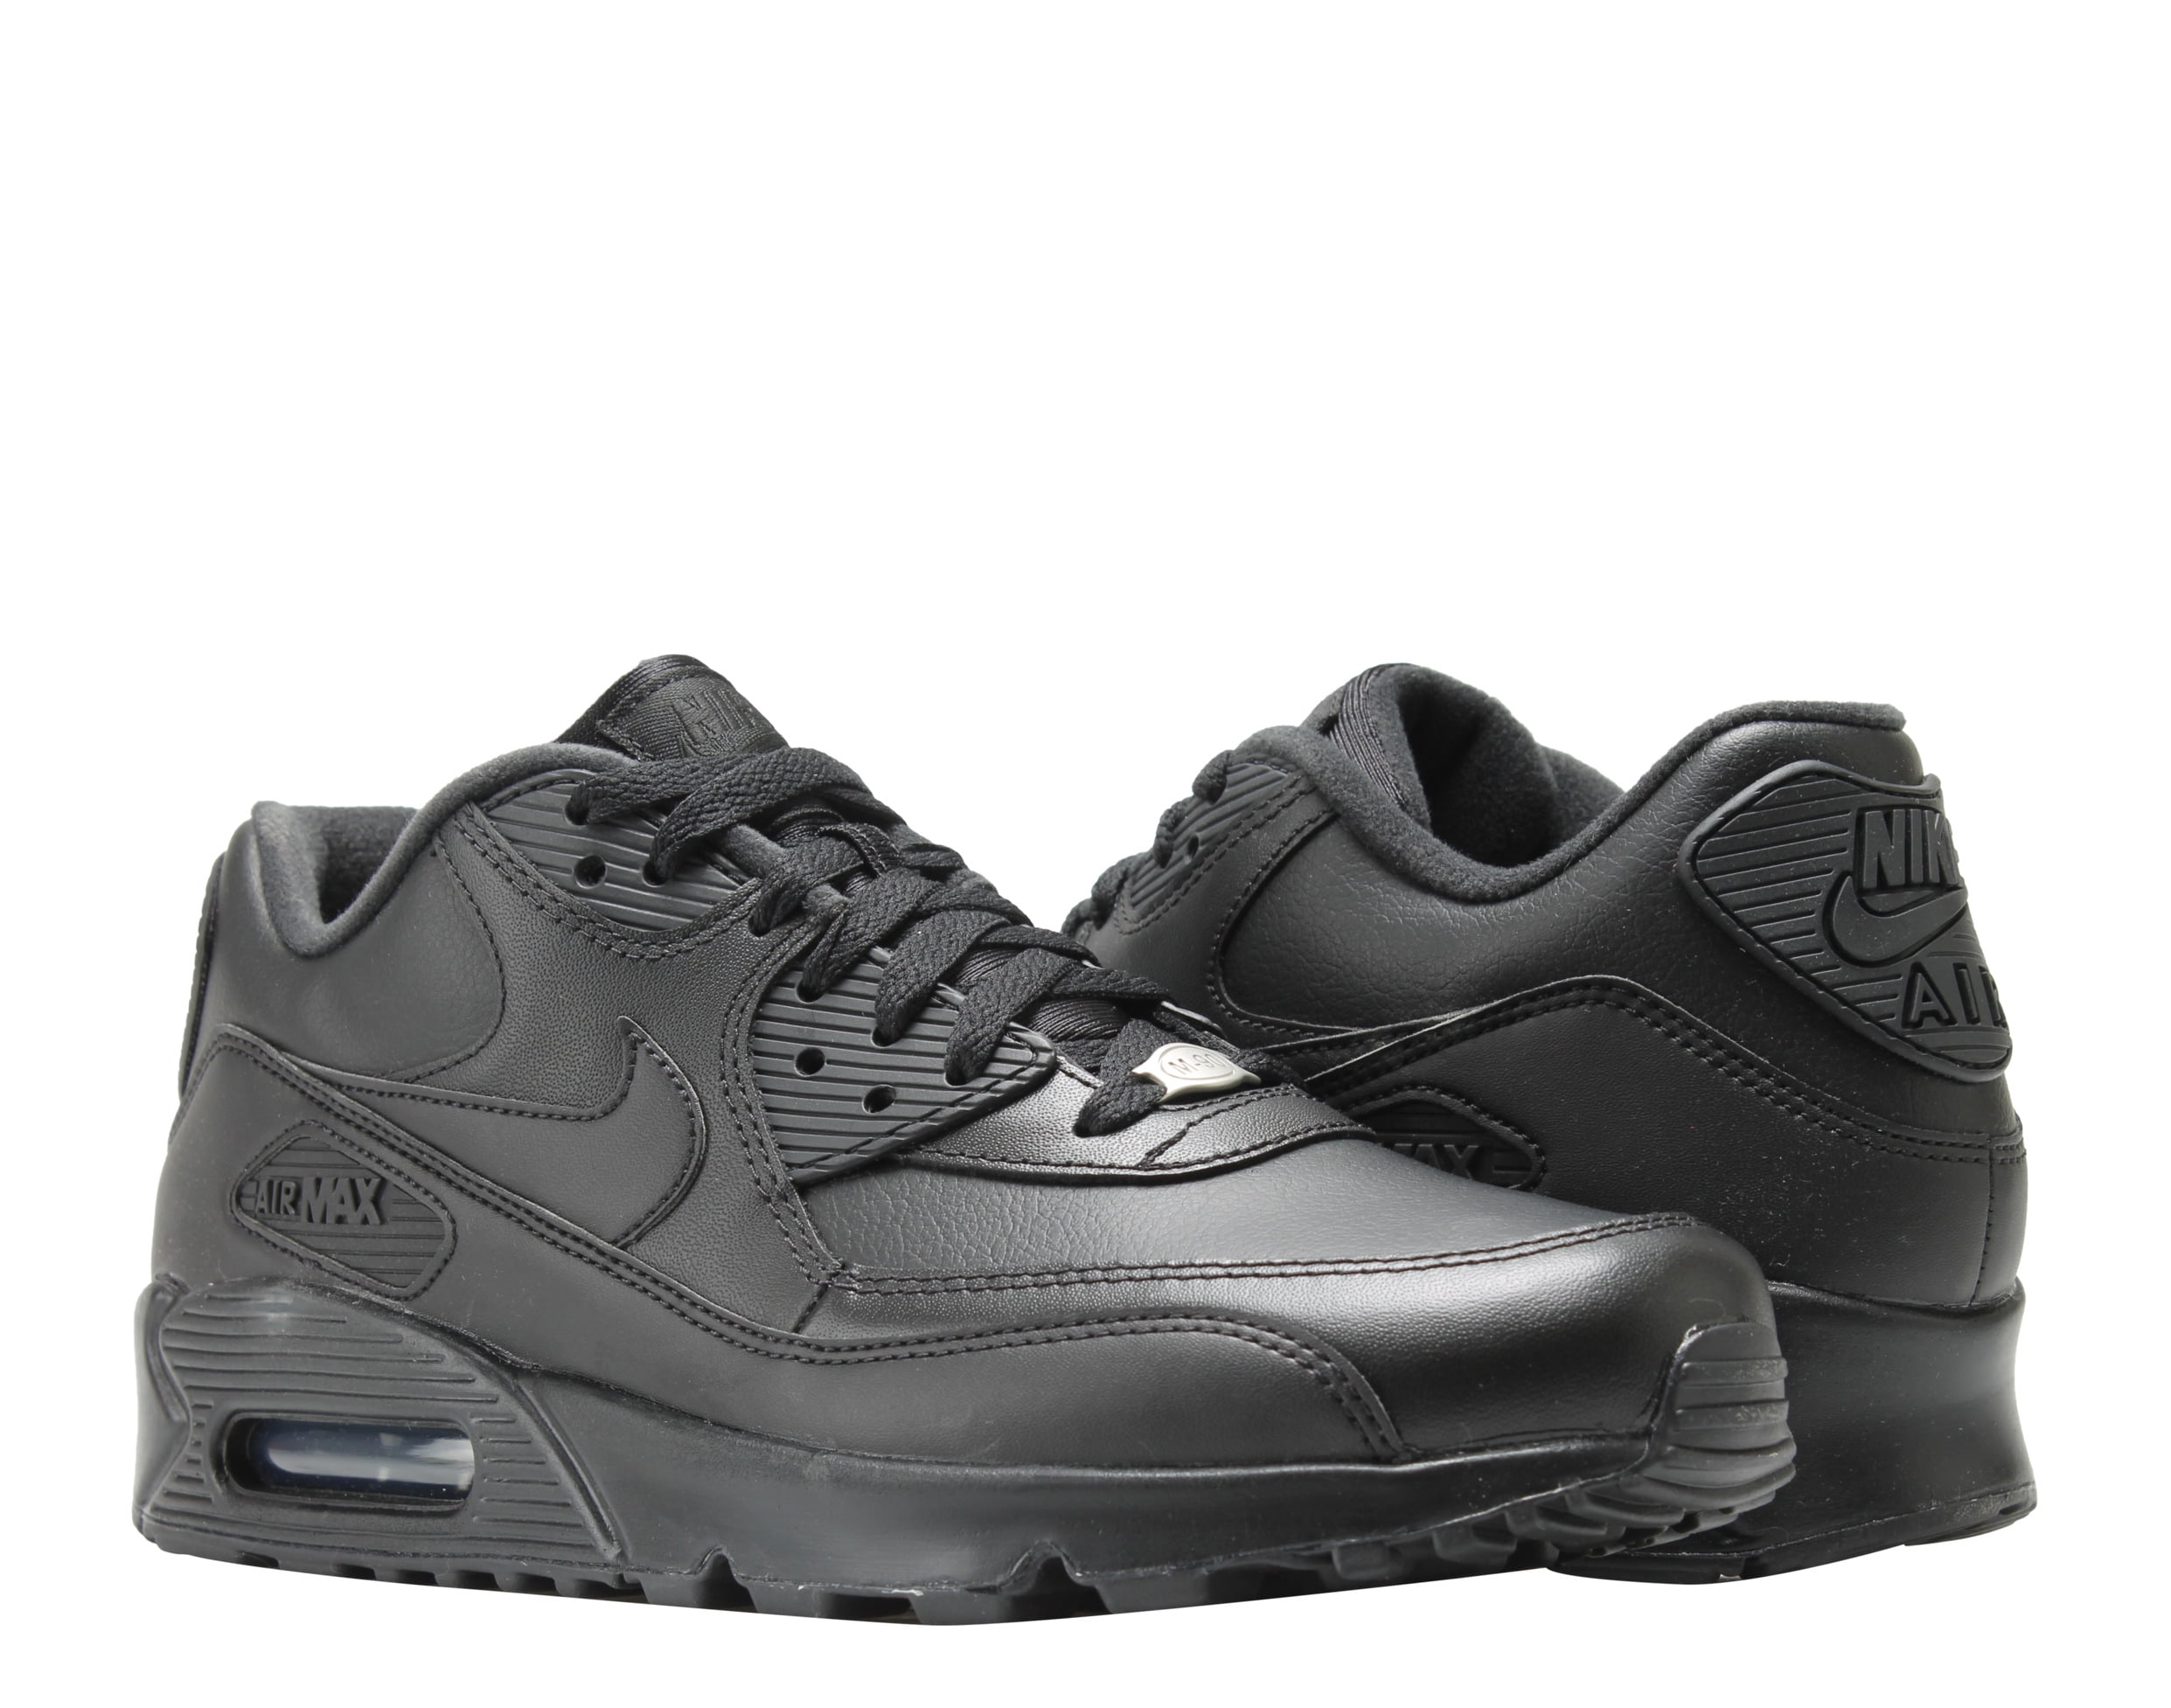 Nike Mens 90 Leather Running Shoes Black/Black 302519-001 Size -